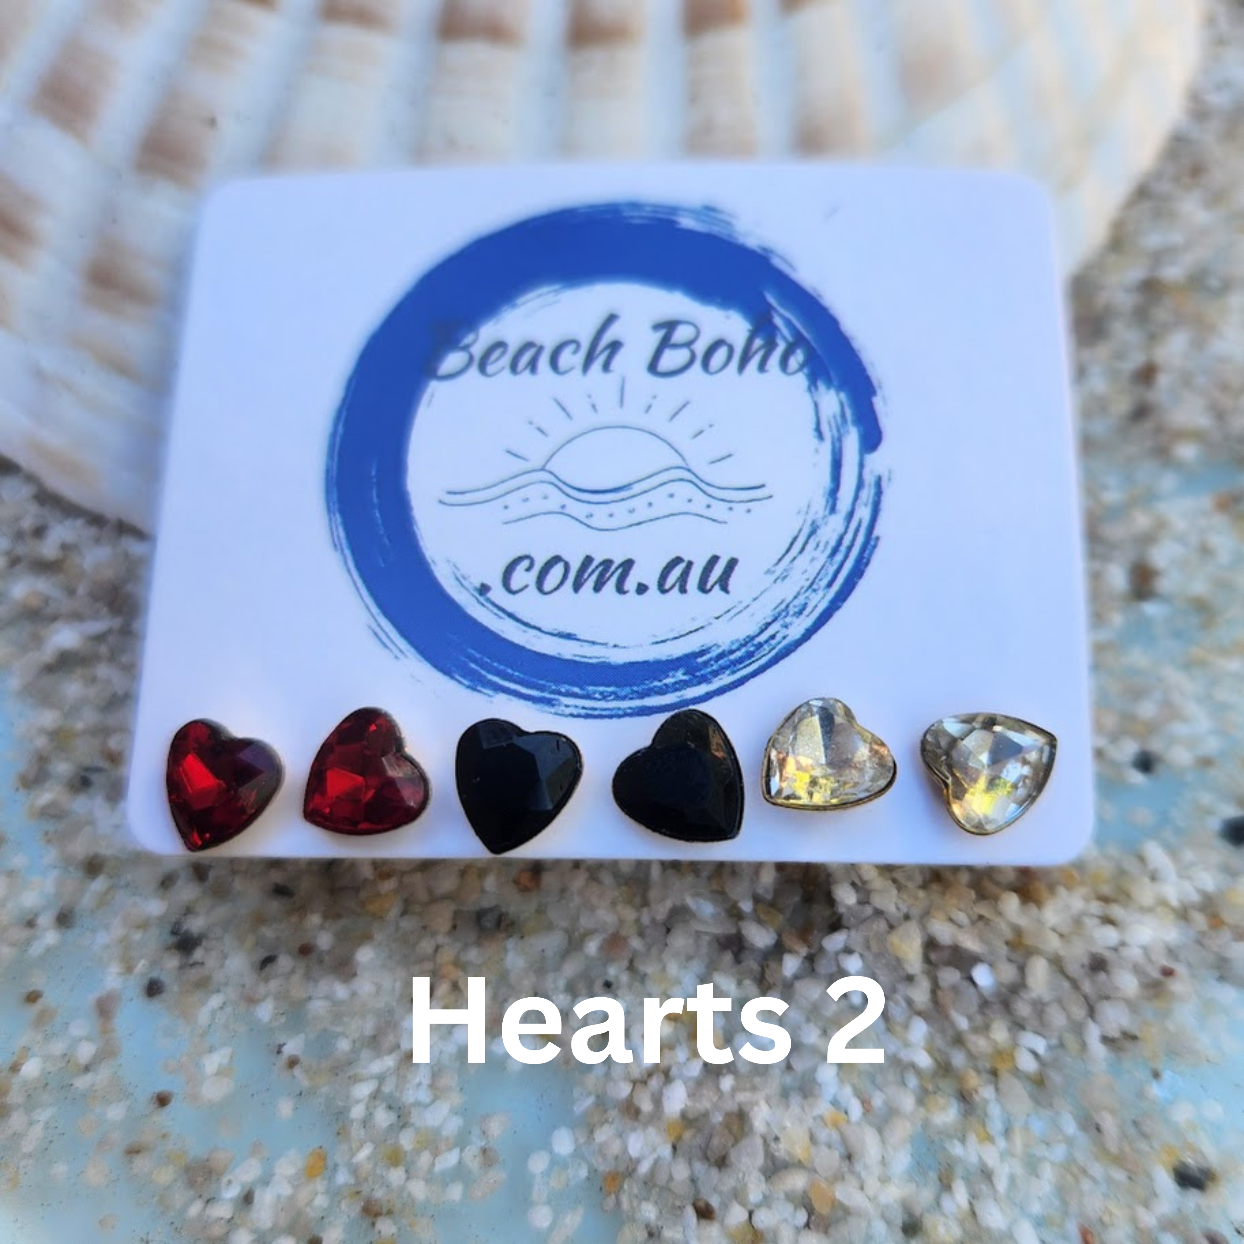 CRYSTAL HEARTS - 3 SETS OF 18K GOLD WATERPROOF CUBIC ZIRCONIA STUD EARRINGS - Premium earrings from www.beachboho.com.au - Just $35! Shop now at www.beachboho.com.au